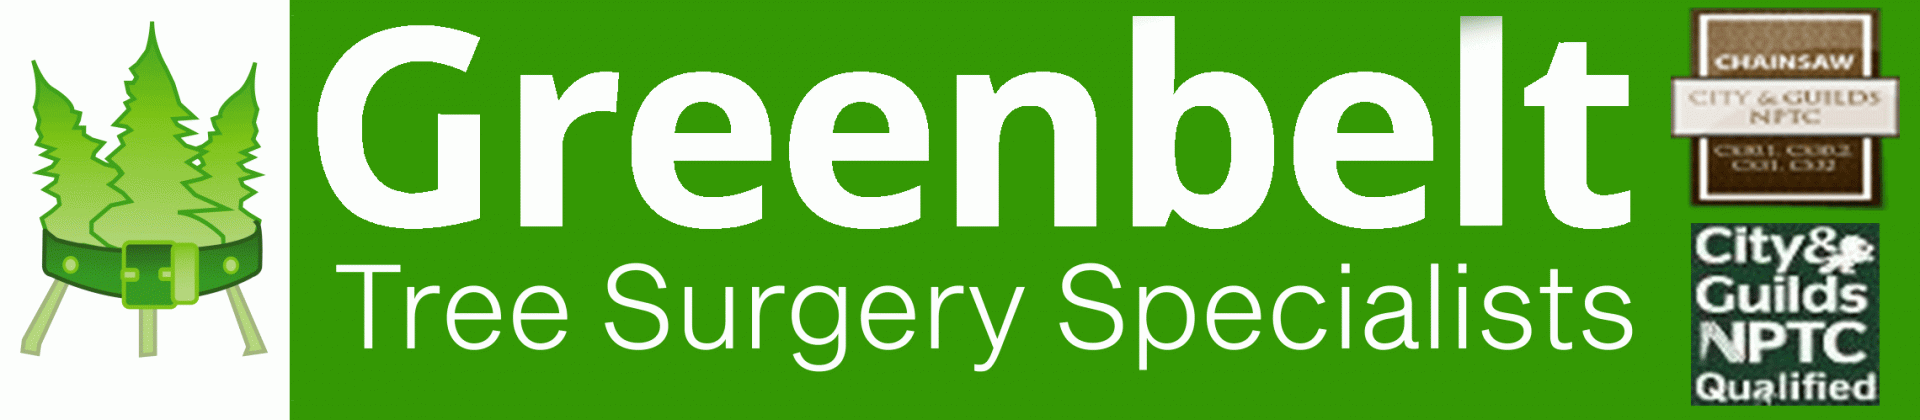 Greenbelt Tree Surgery Specialists tree surgeon, Bognor Regis